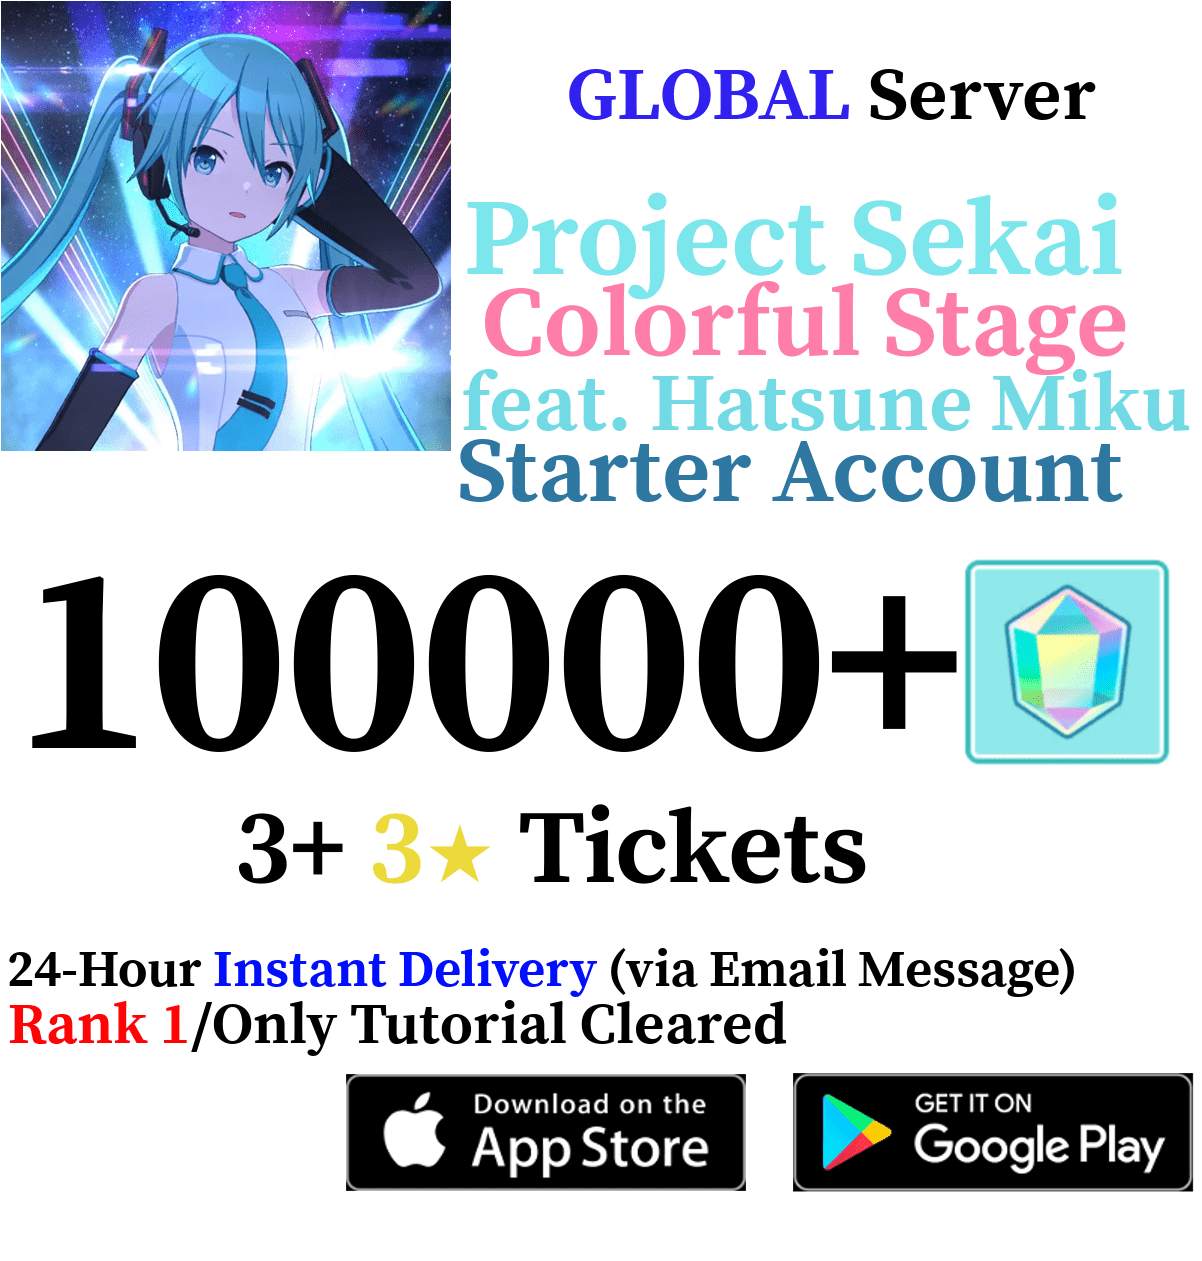 [GLOBAL] [INSTANT] 100000+ Gems Project Sekai Colorful Stage ft. Hatsune Miku PJSekai Reroll Account - Skye1204 Gaming Shop